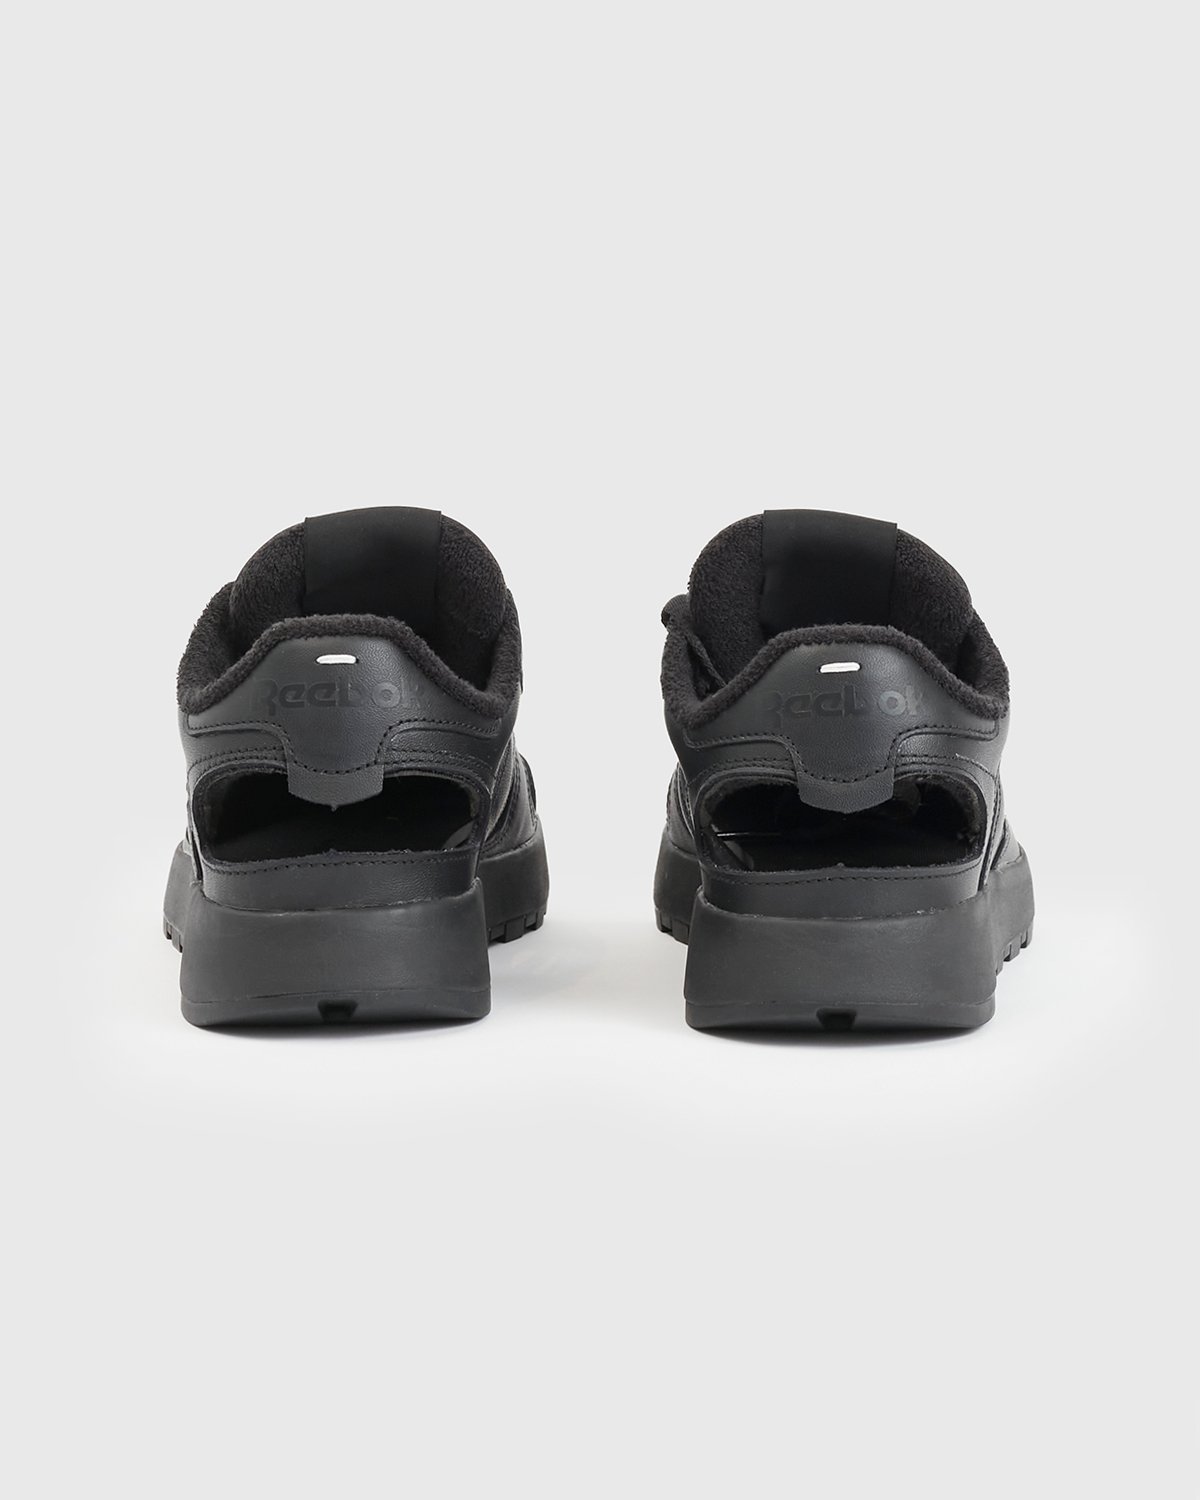 Maison Margiela x Reebok - Classic Leather Tabi Low Black - Footwear - Black - Image 3